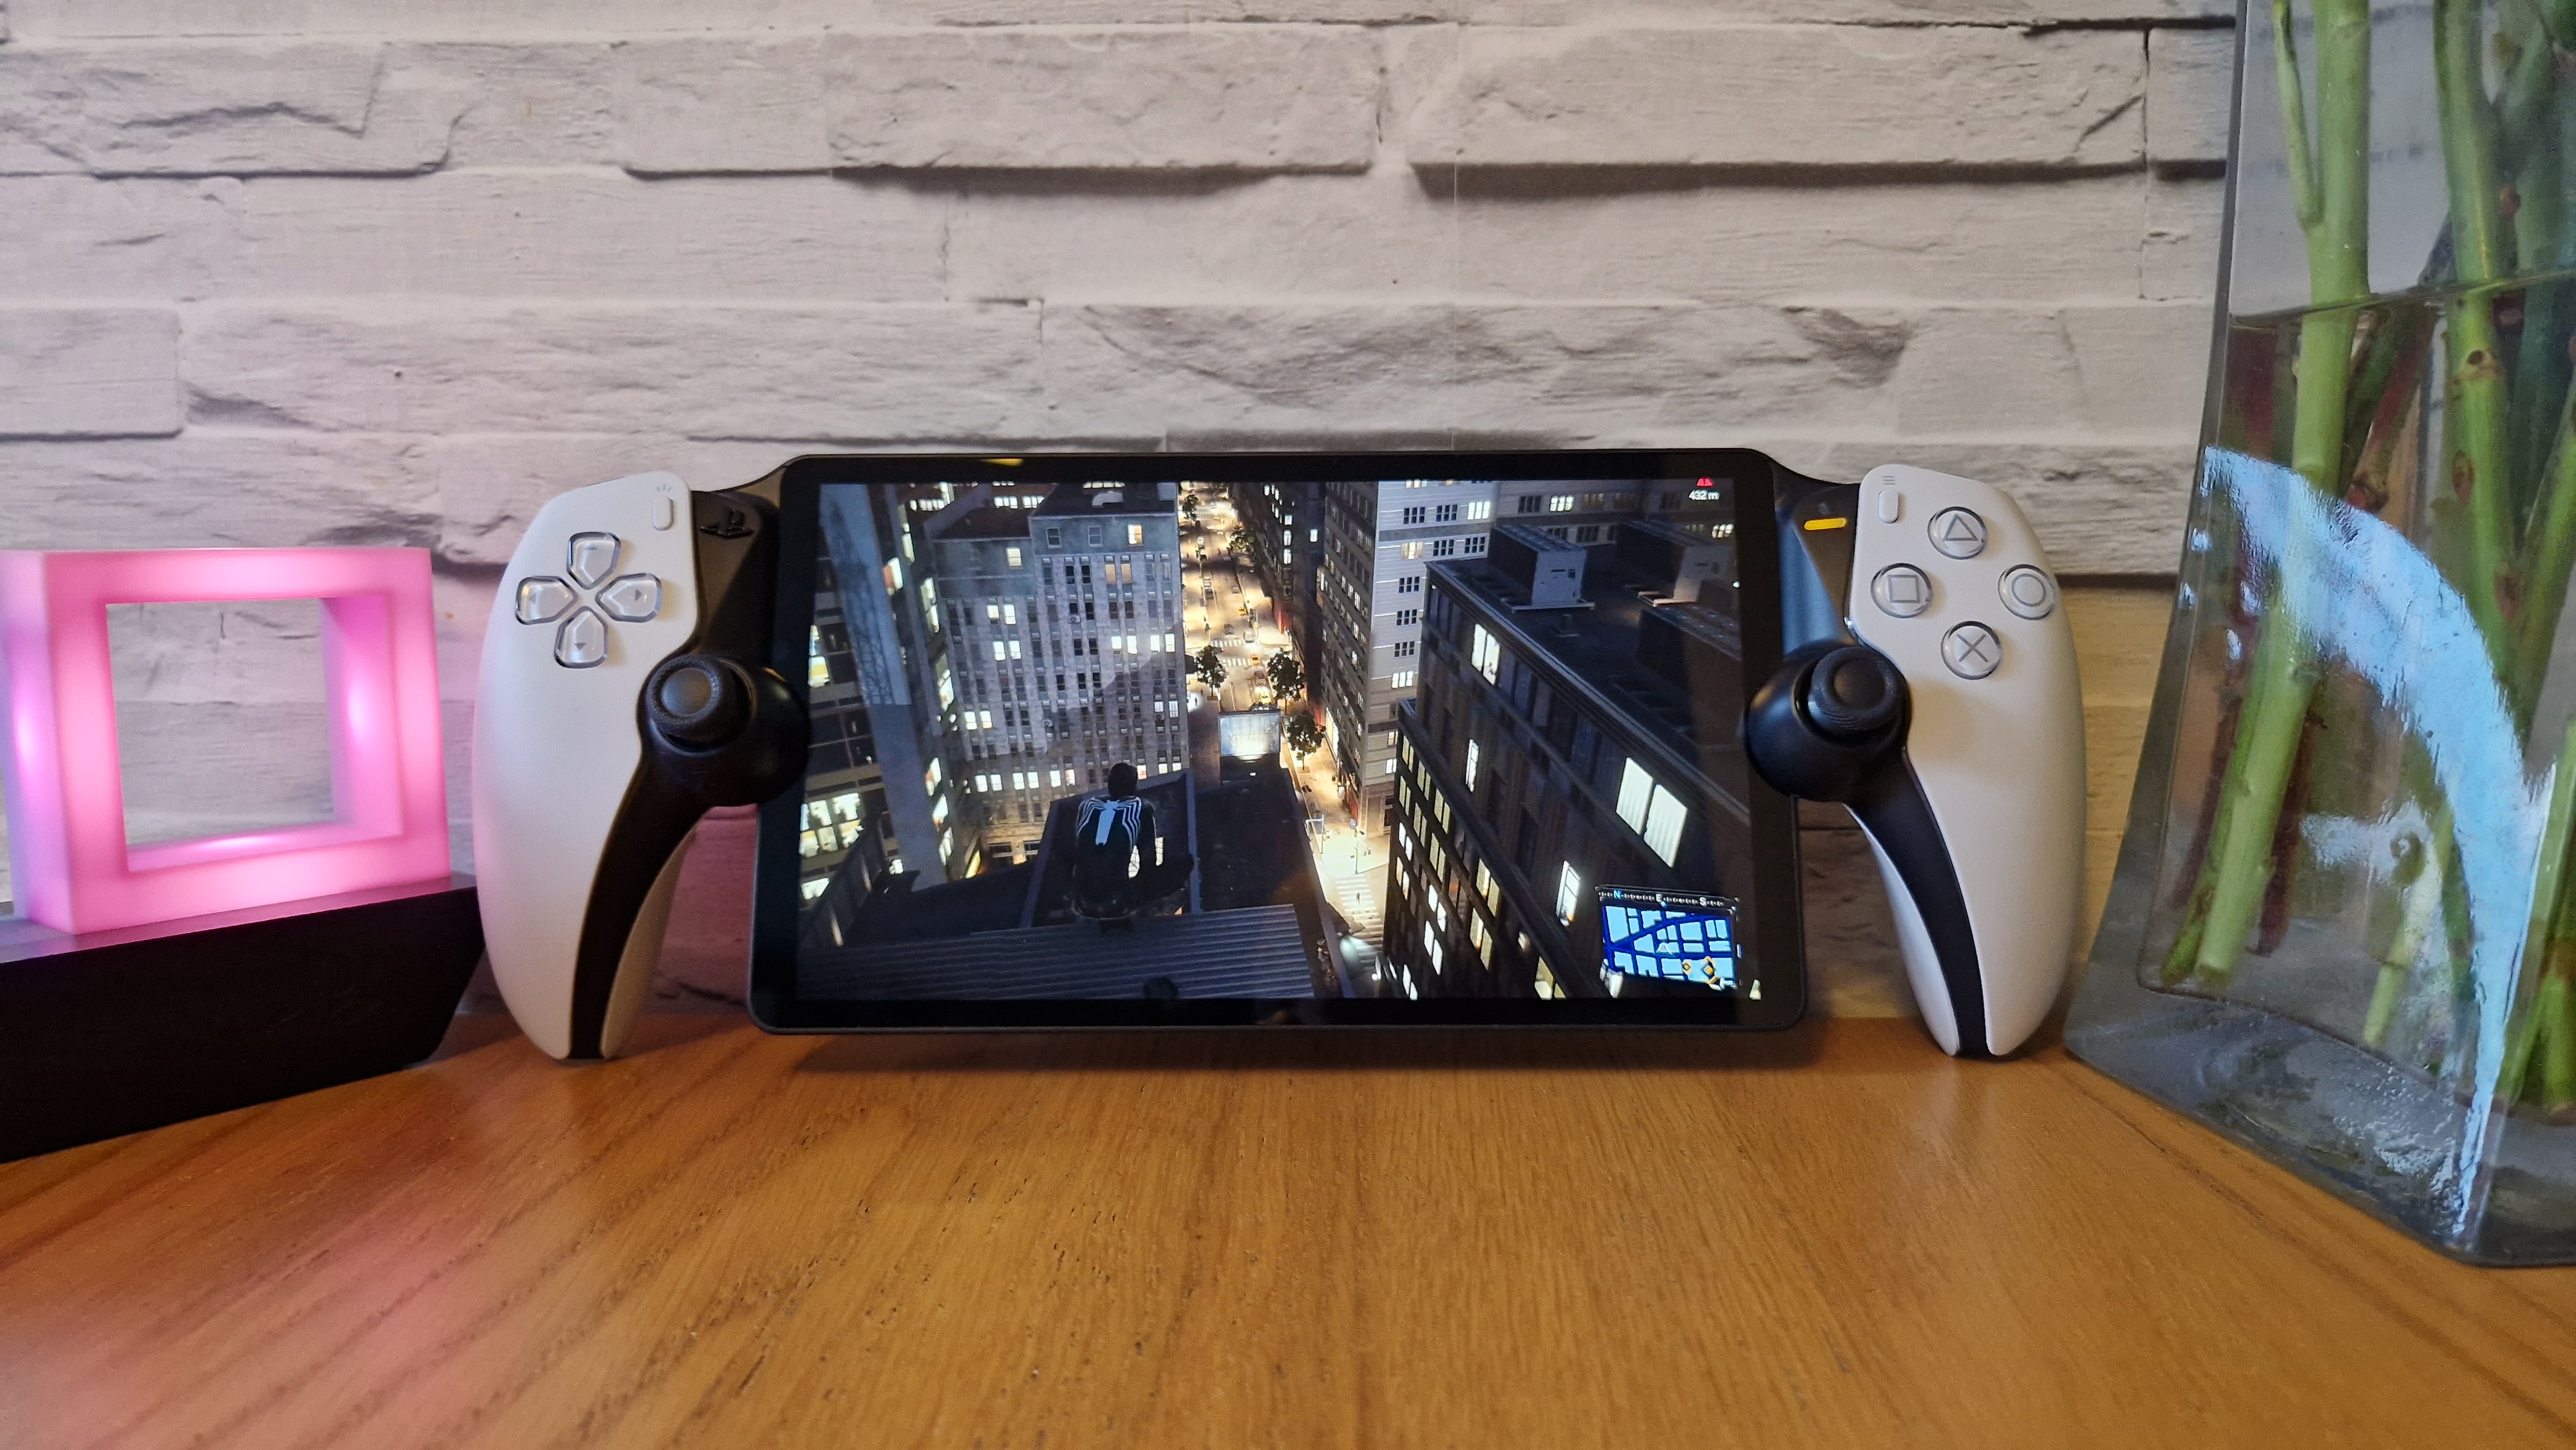 PlayStation Portal-recension - en lysande utveckling inom Remote Play